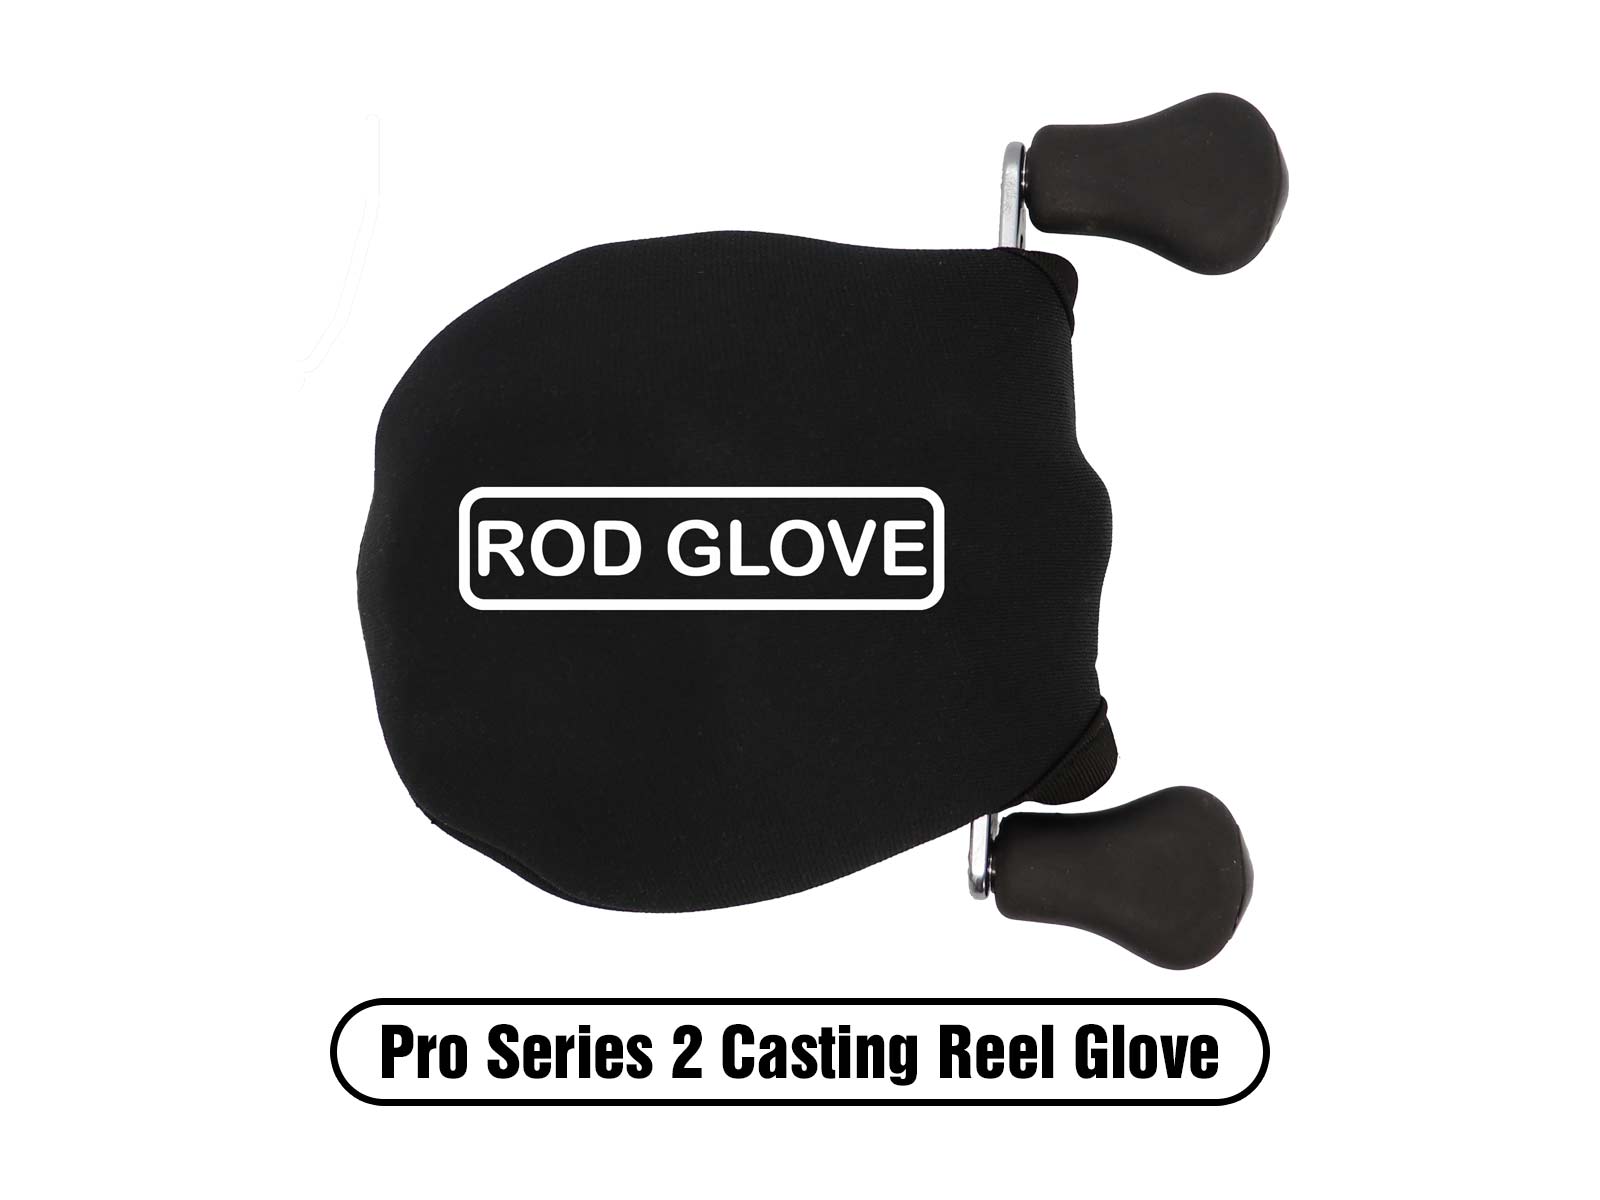 The Rod Glove Saver